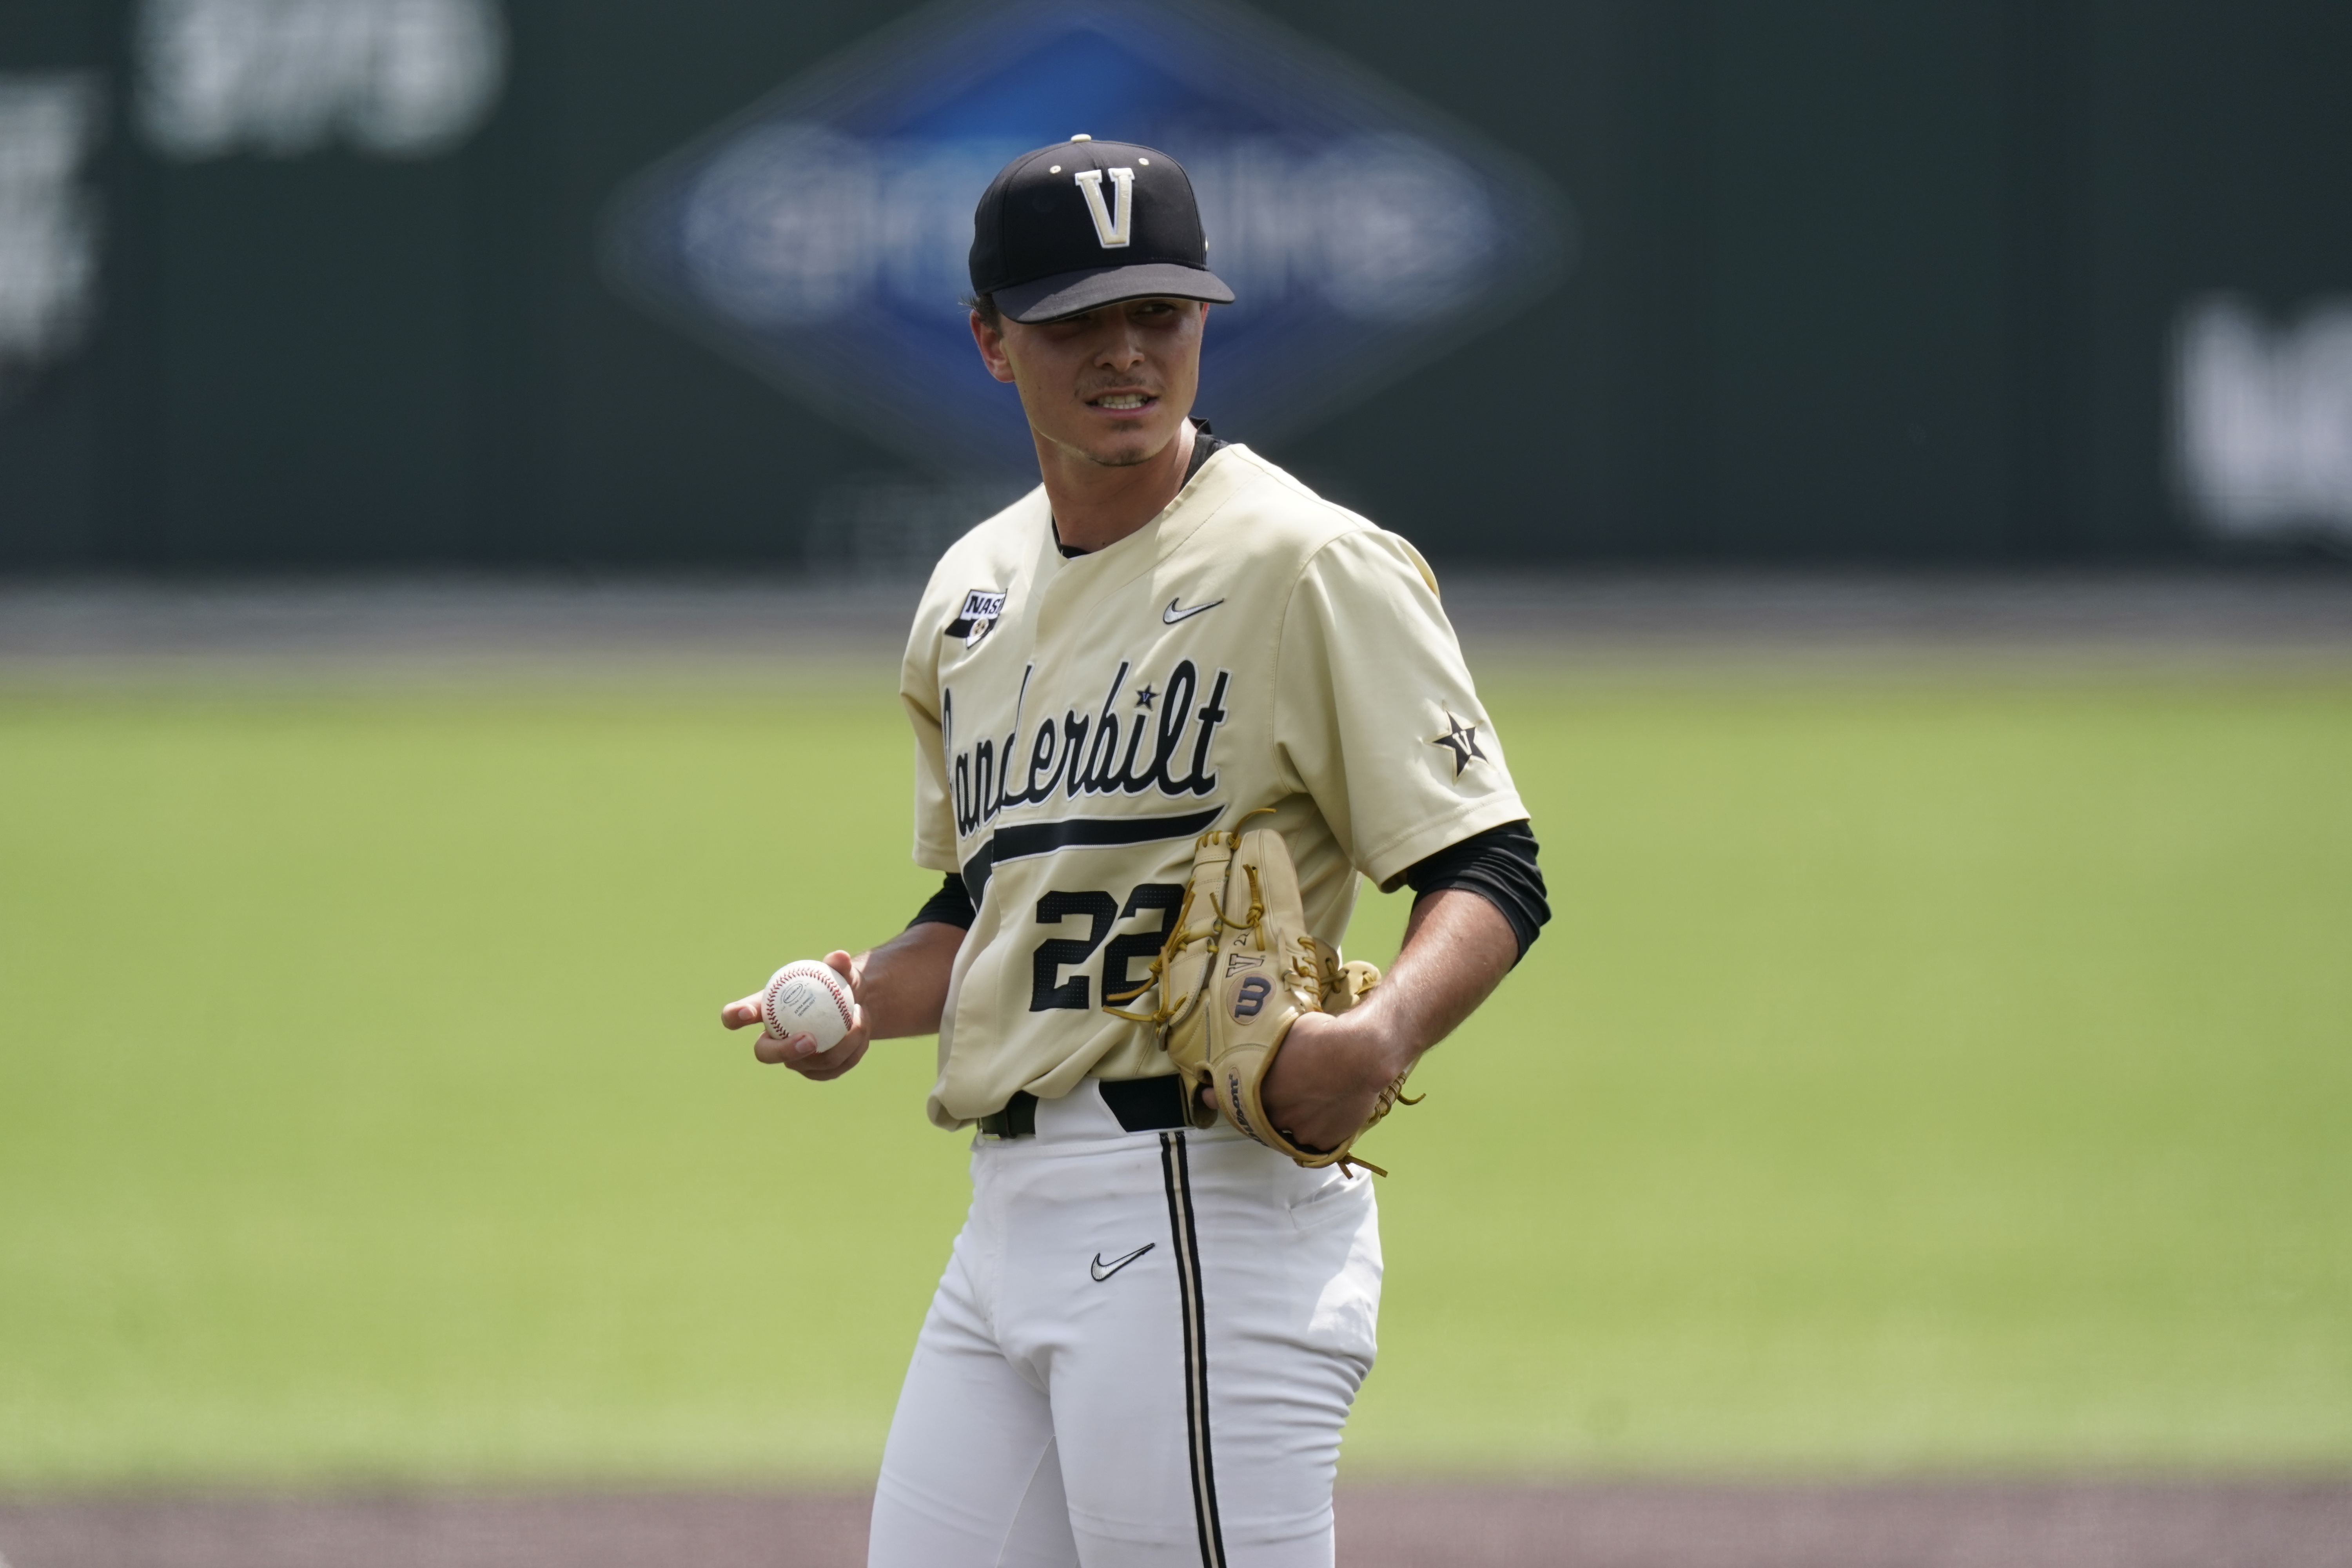 Jack Leiter: 2021 MLB Draft top prospect from Vanderbilt, NJ ready